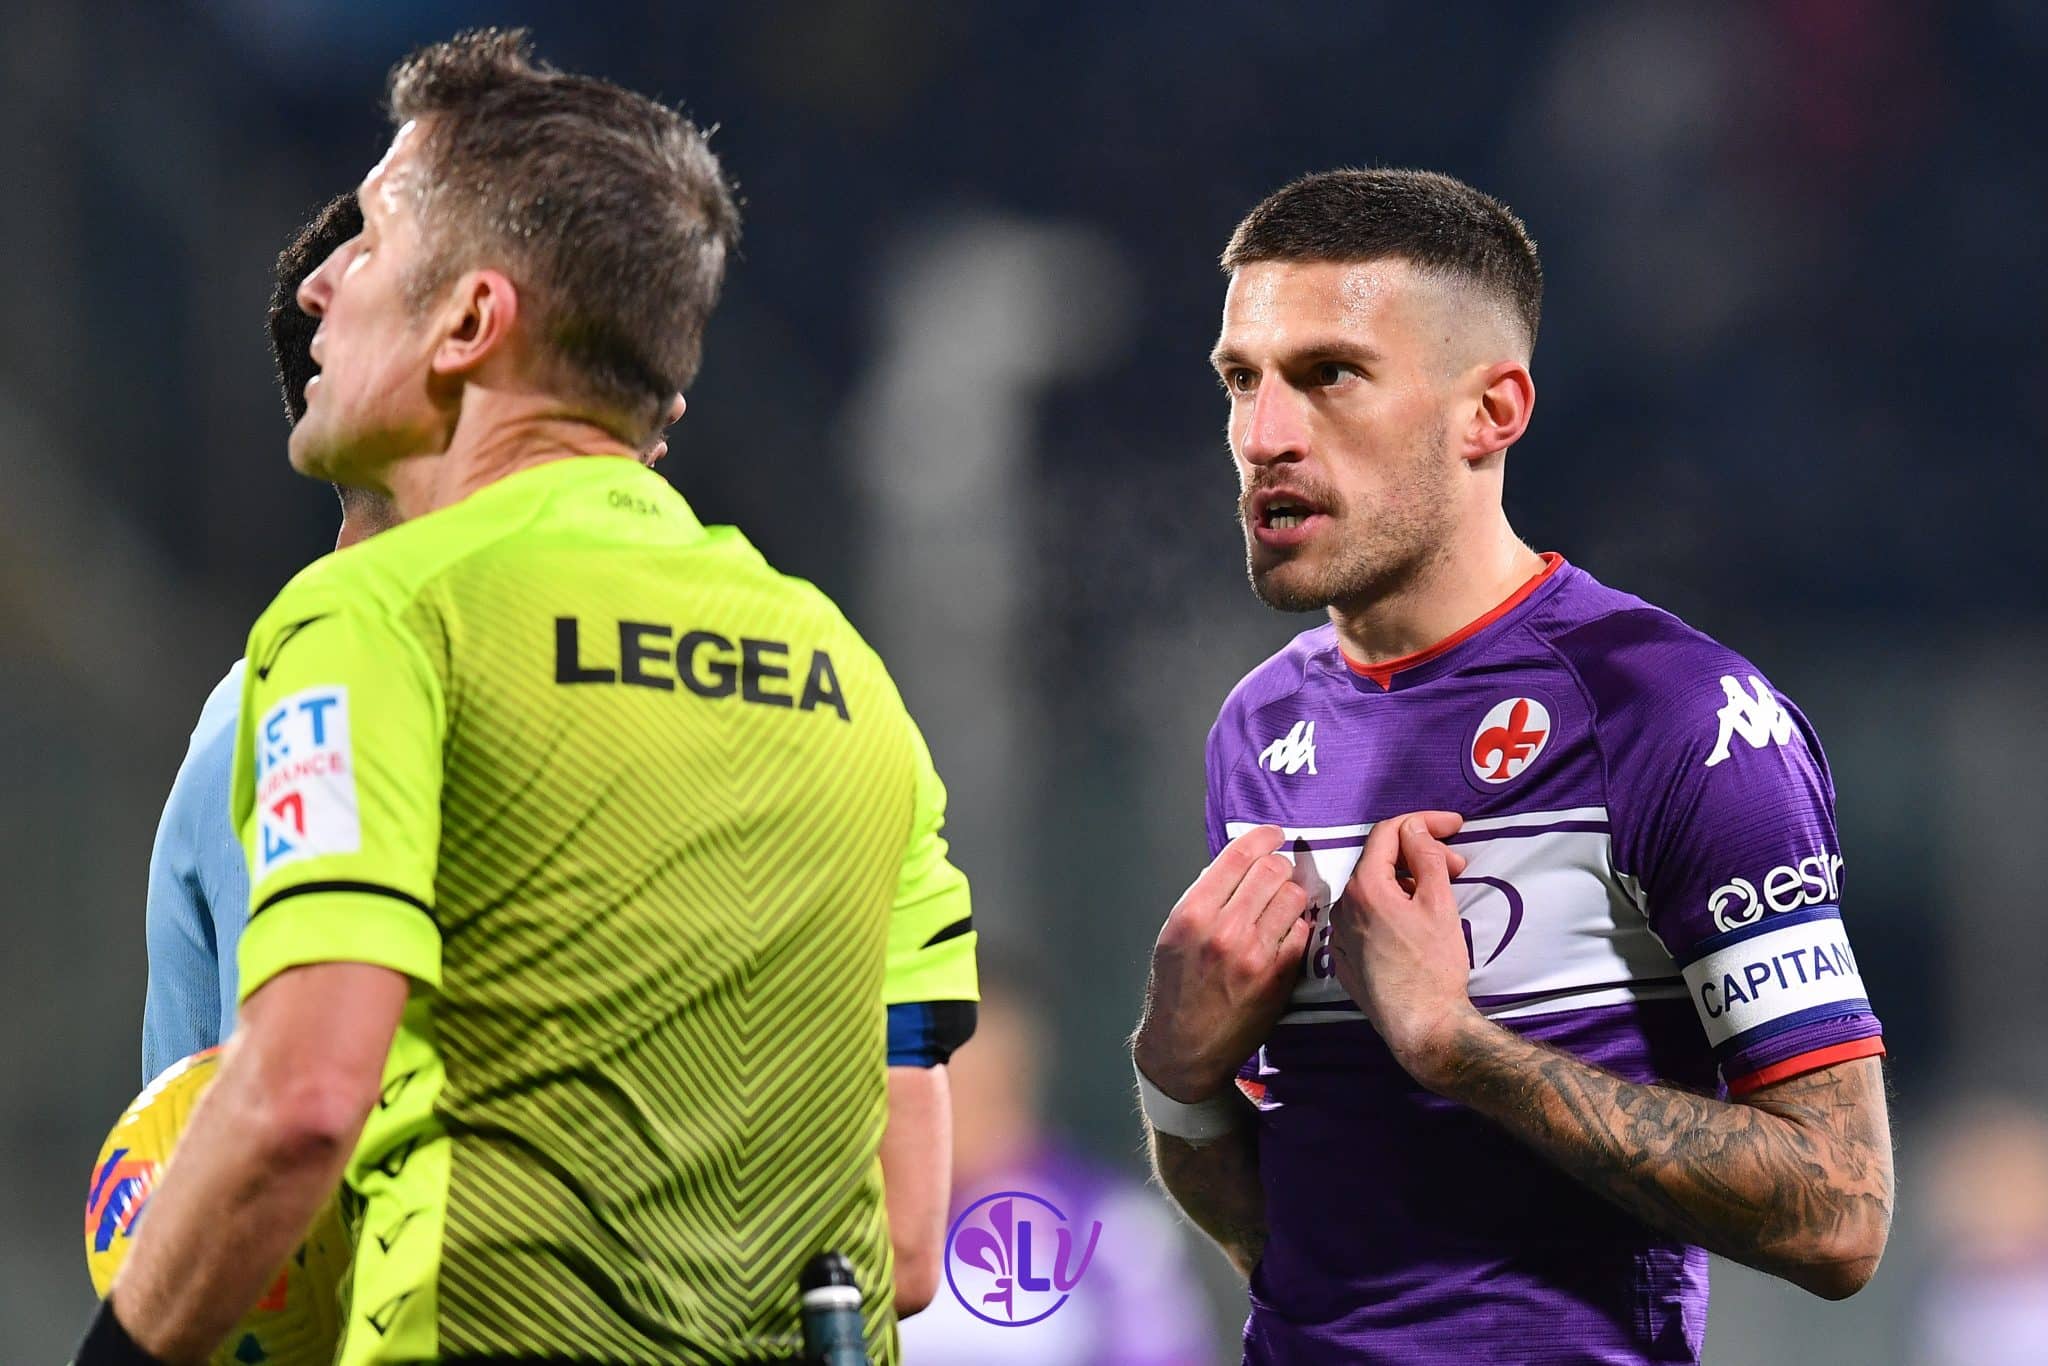 La Fiorentina Salernitana sera arbitrée par La Penna, comme la Juventus Fiorentina 0-3